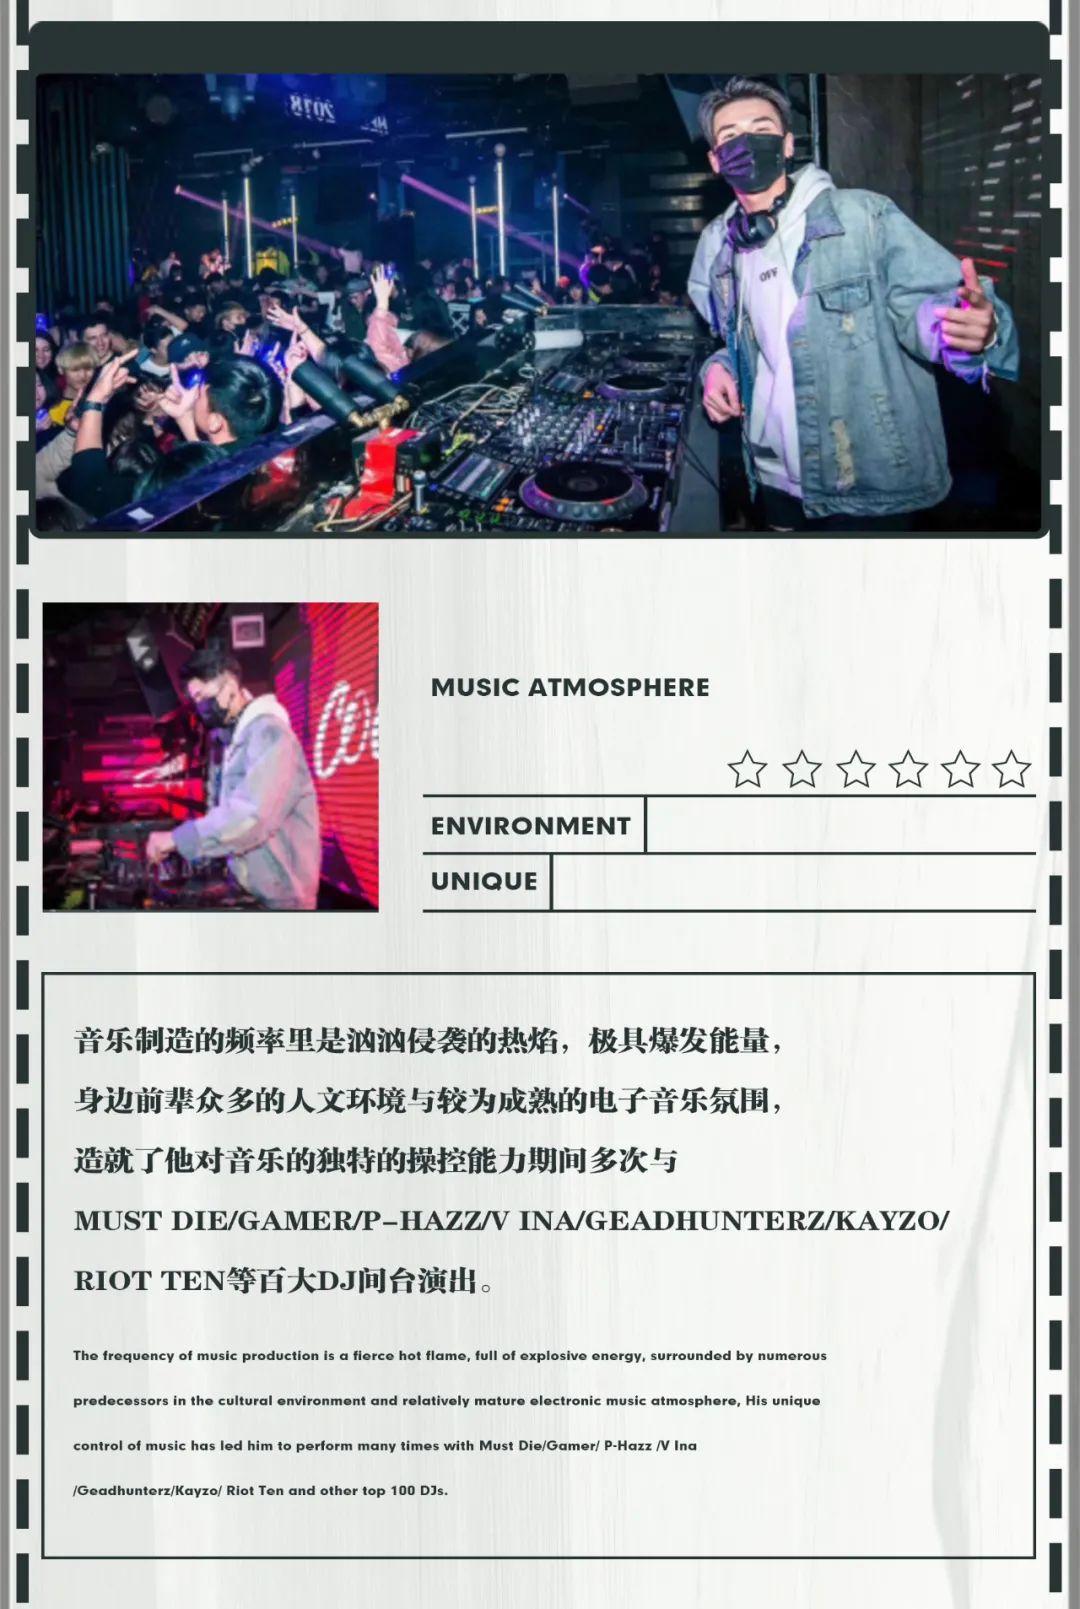 04.30 | DJ RECK，给5月一个合适的开头。-南昌Life Club 南昌